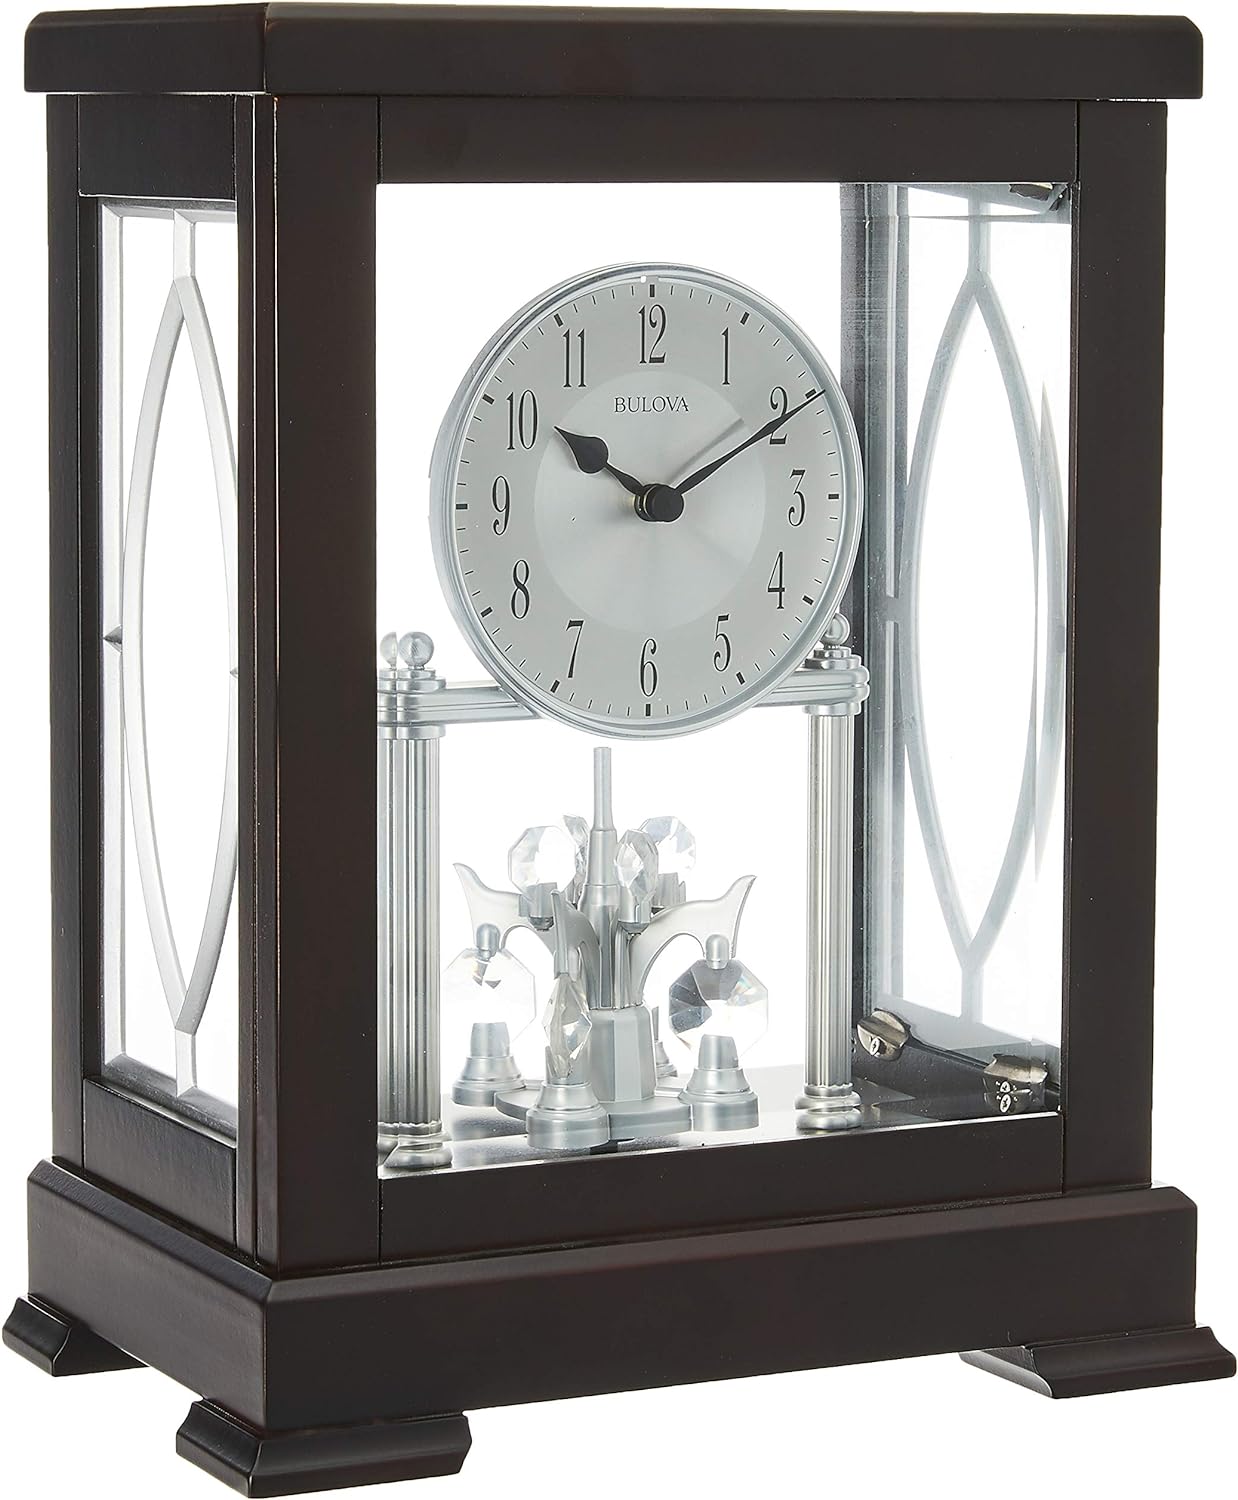 Bulova B1534 Empire Anniversary Mantel Clock